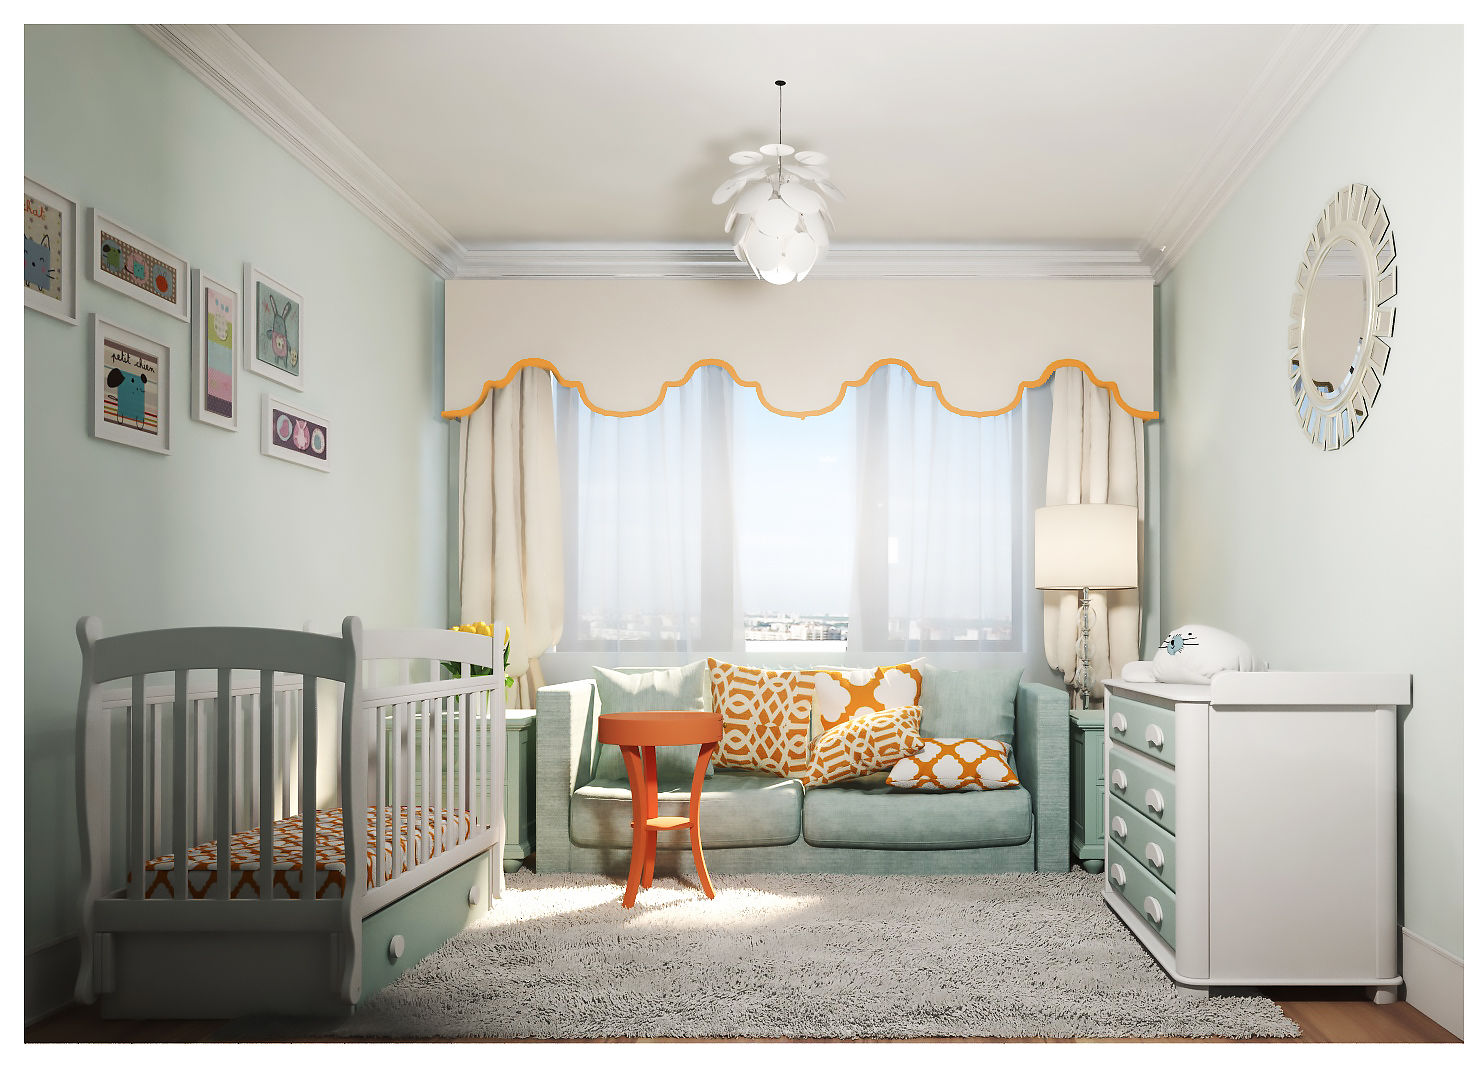 3-bedroom Apartment, Moscow , Alexander Krivov Alexander Krivov Klassieke kinderkamers